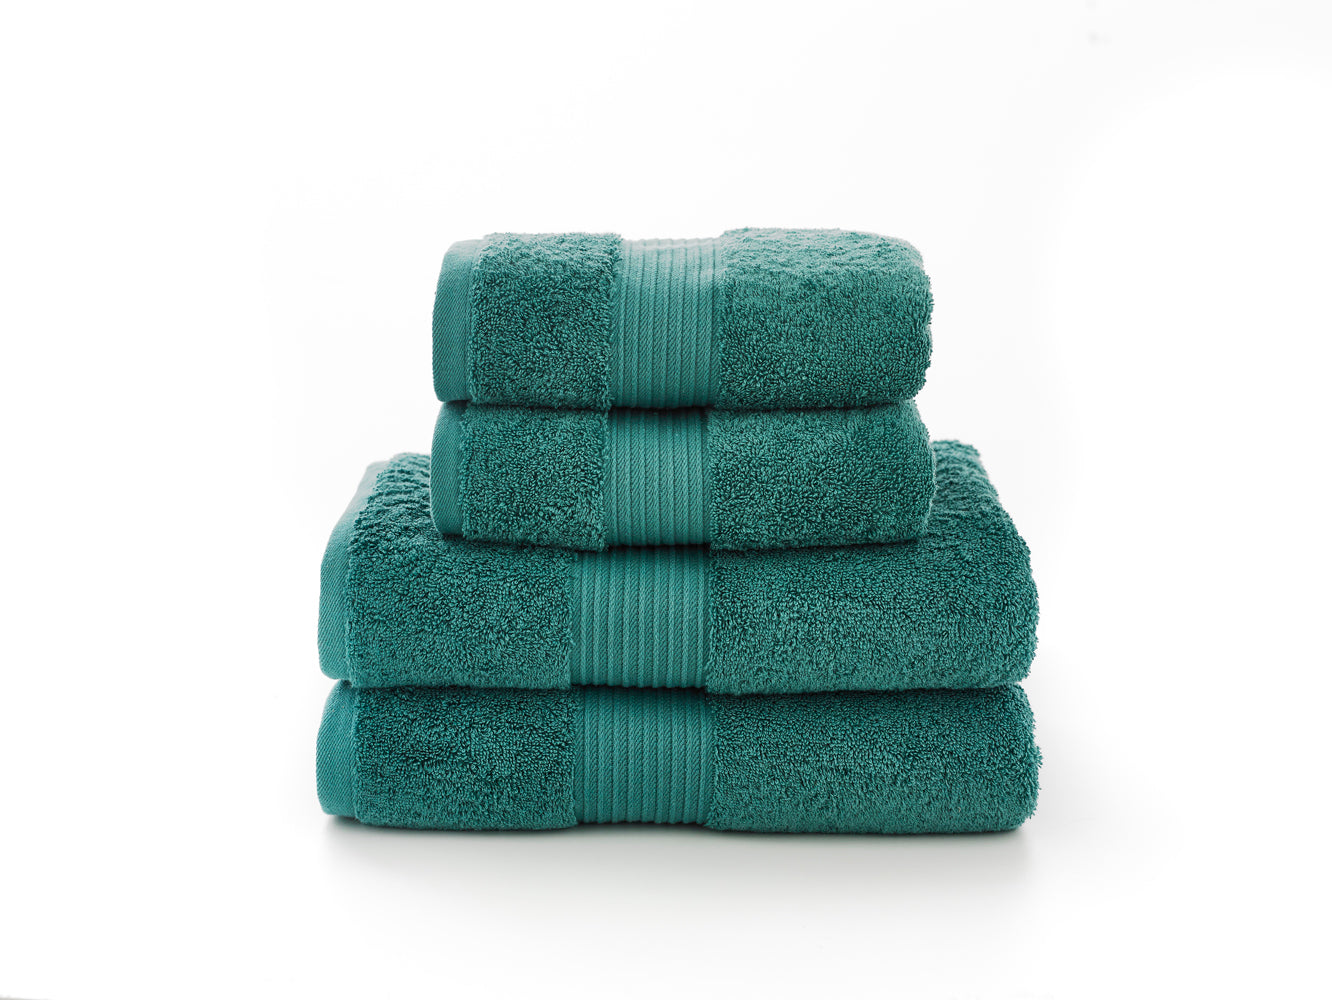 Bliss Supersoft Pima Cotton Towel - Deyongs